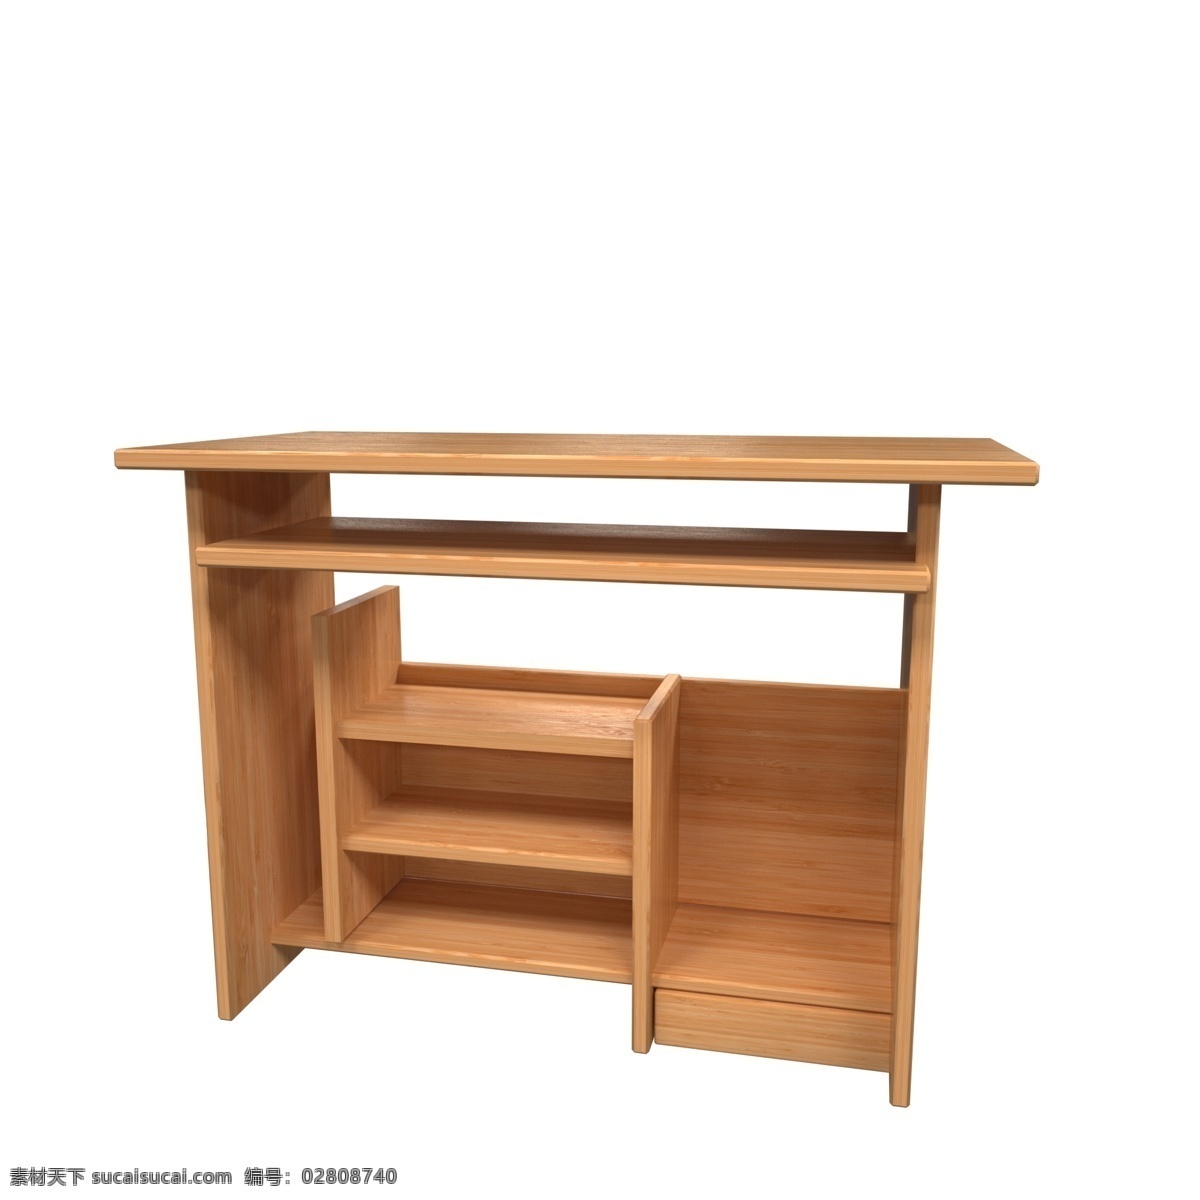 3d 写实 木质 电脑桌 c4d 写实仿真 家居 装饰 办公室 客厅 卧室 抽屉 桌子 木质桌子 置物架 柜子